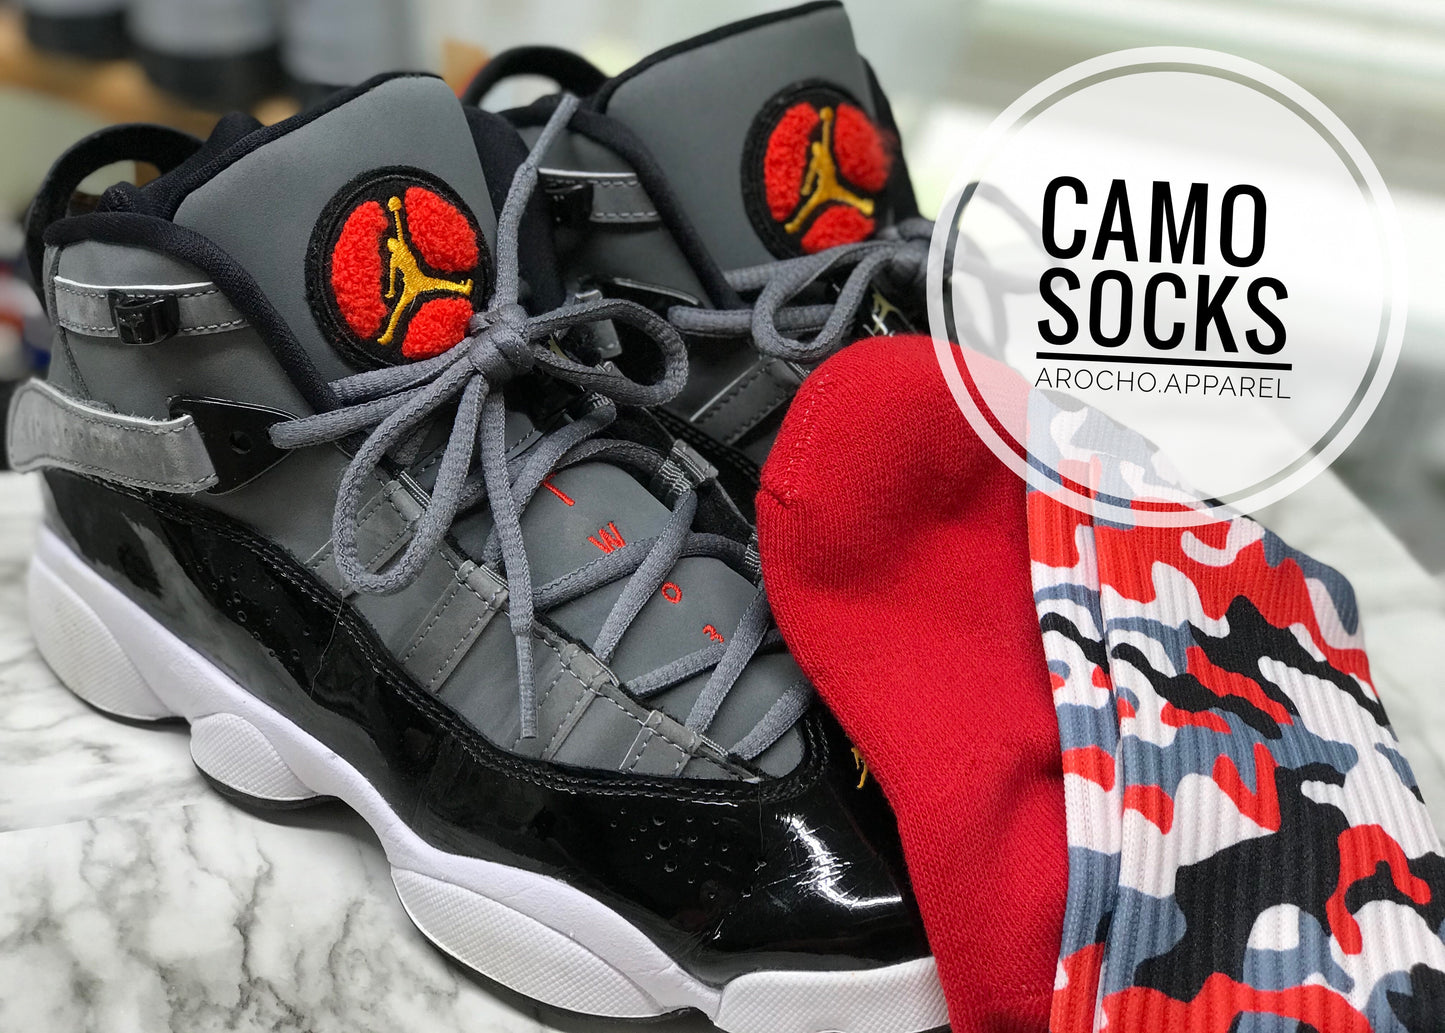 Camo Athletic socks